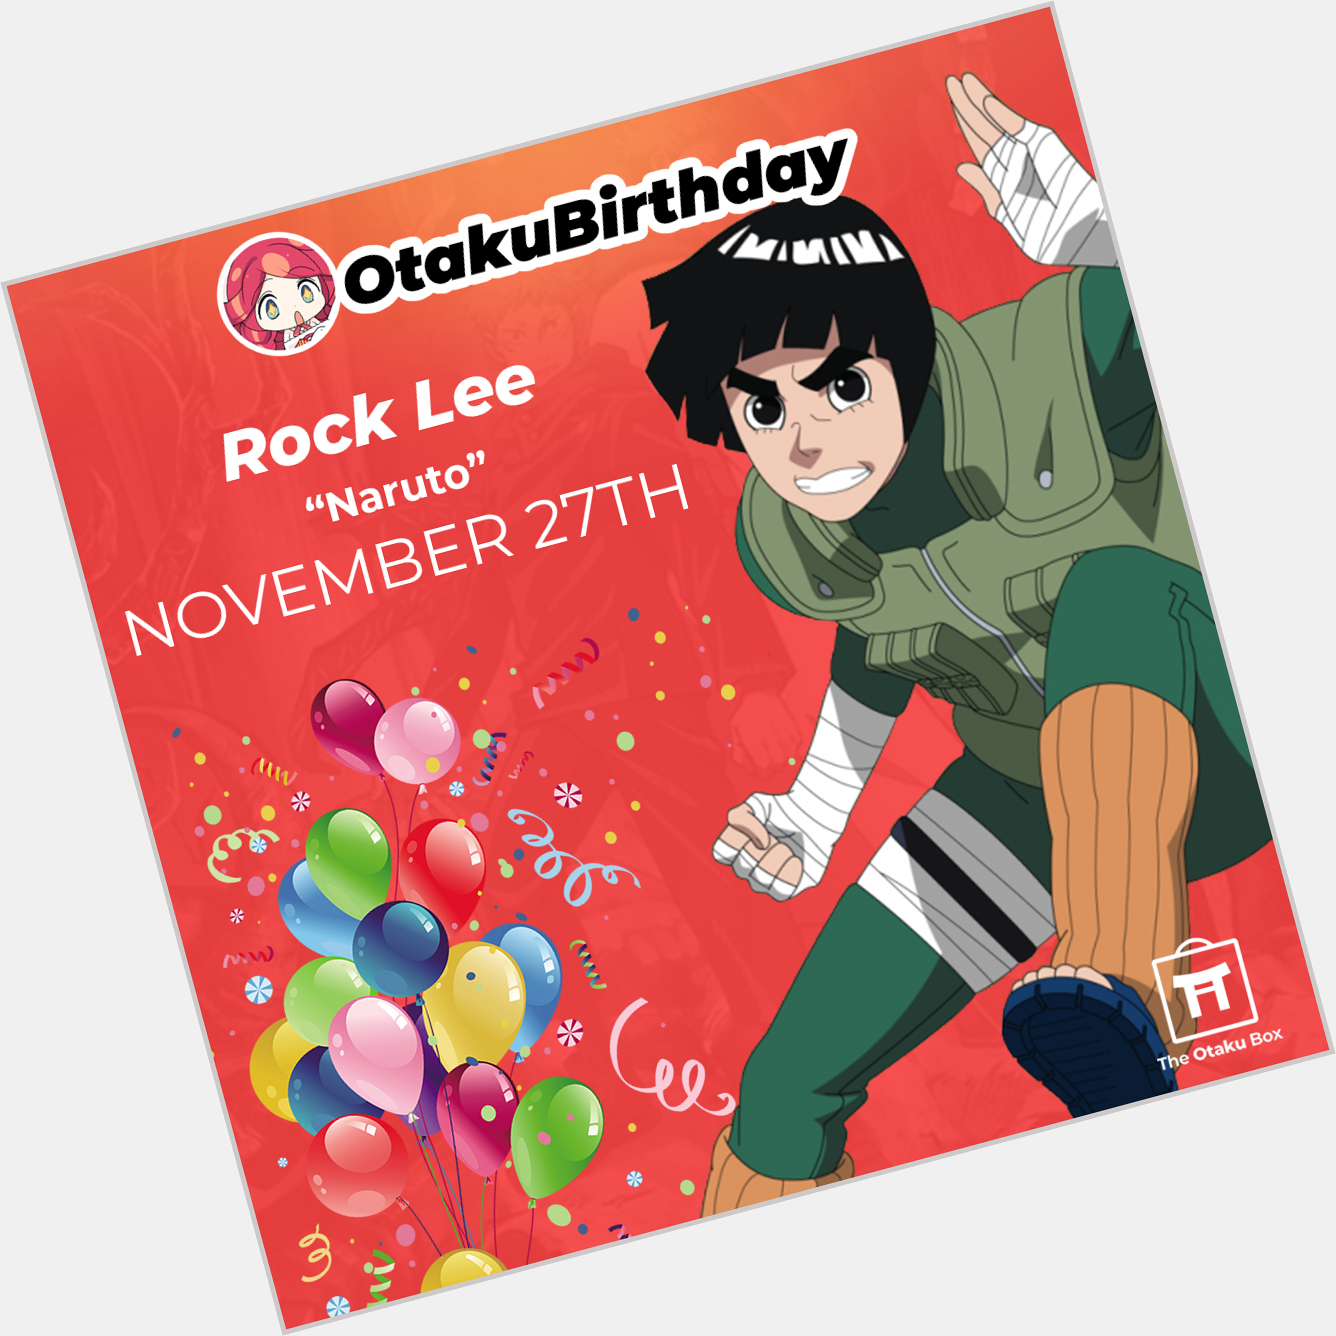  Happy birthday to Rock Lee! Party time, YATTA! -Liz 